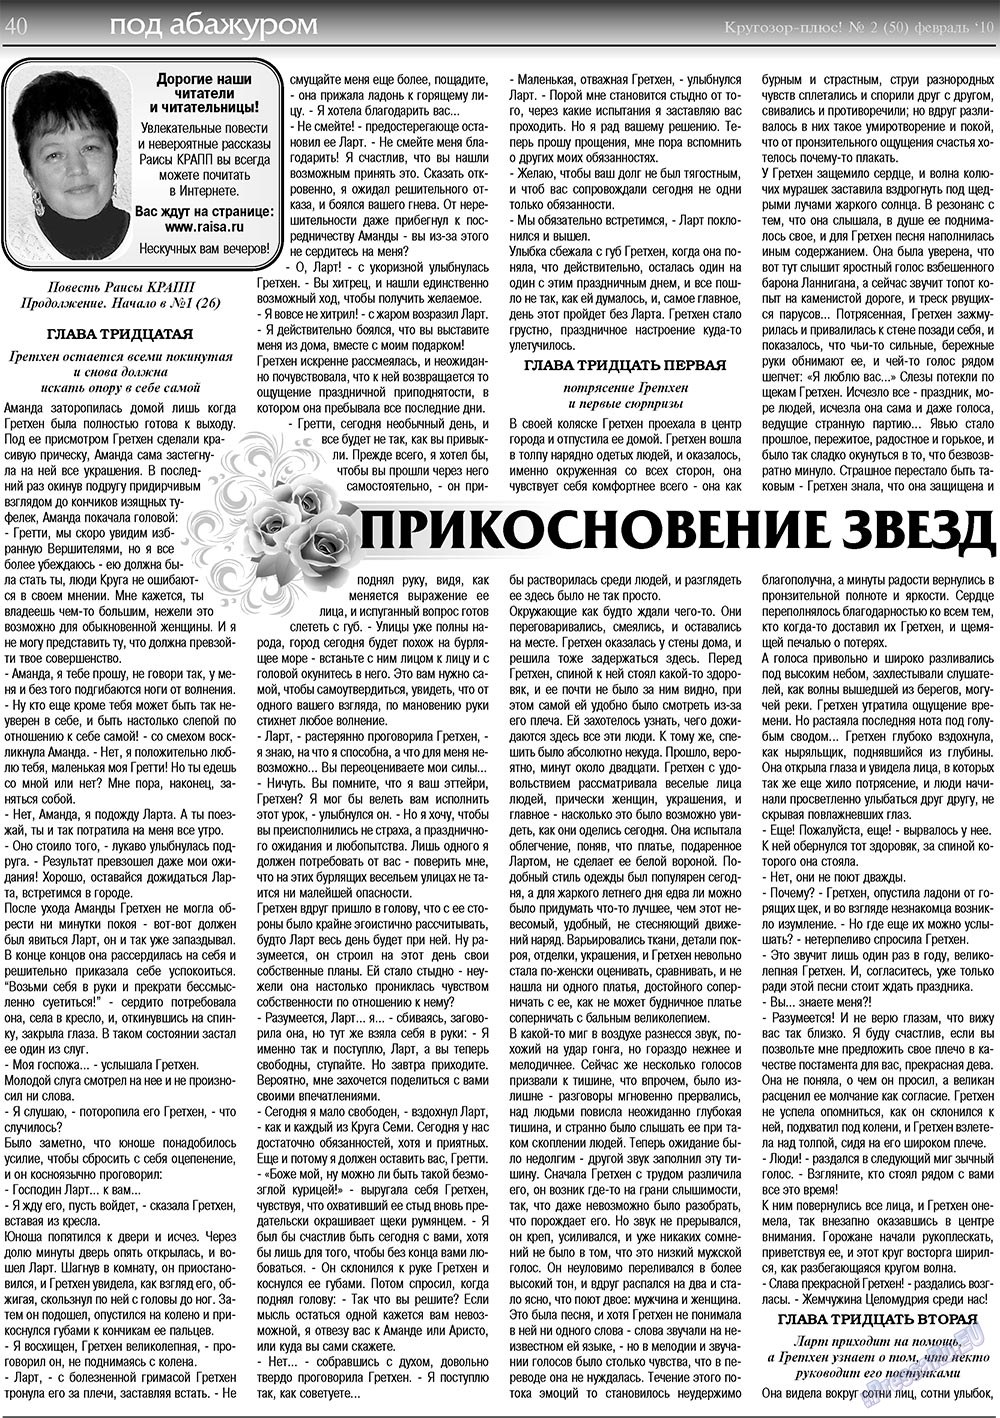 Кругозор плюс! (газета). 2010 год, номер 2, стр. 40